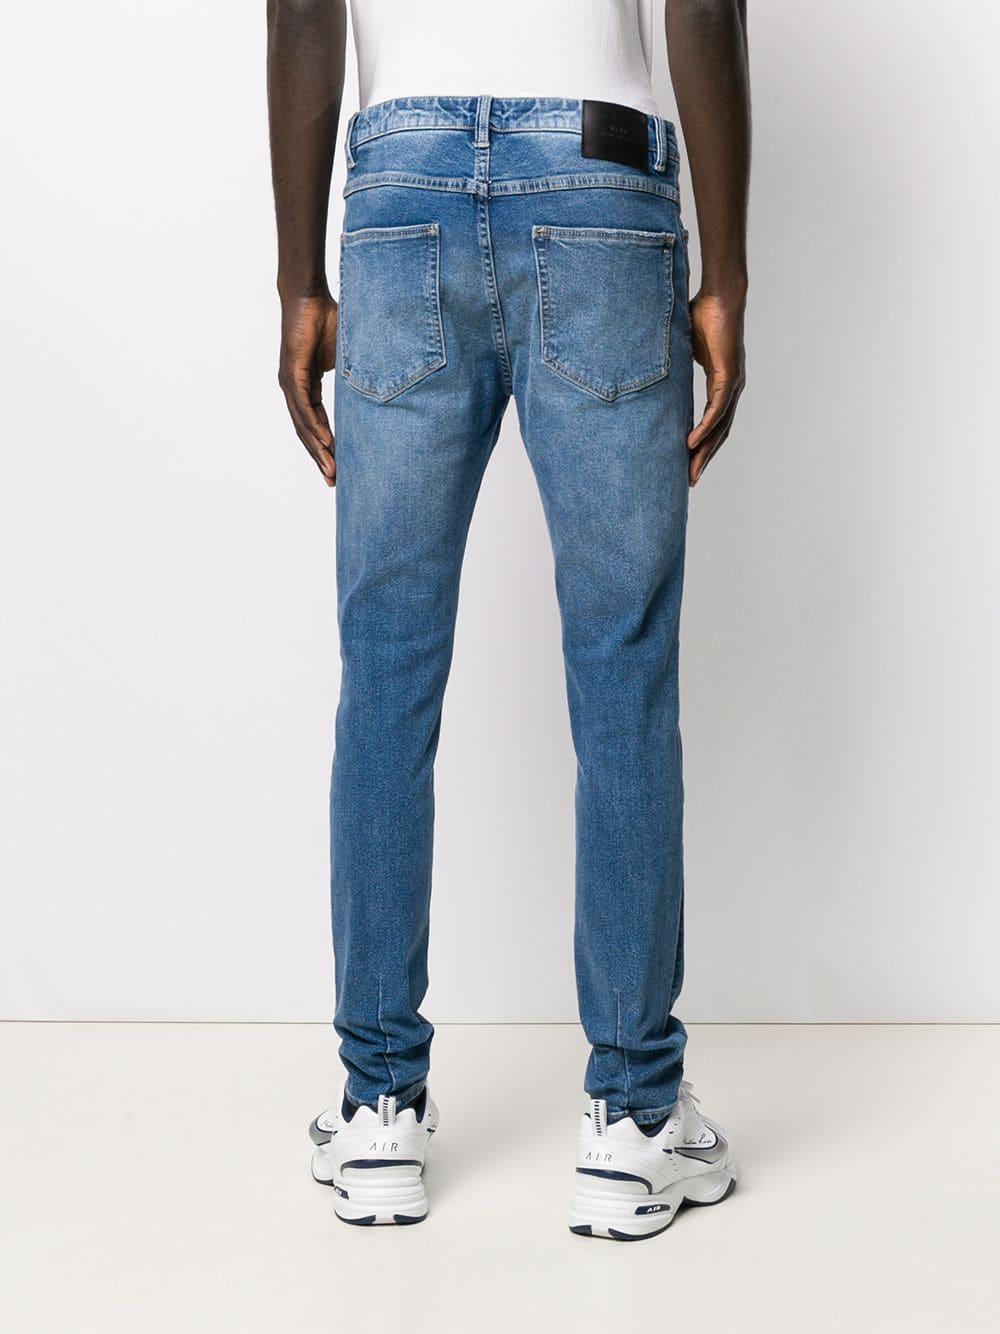 Neuw Denim Skinny-fit Jeans in Blue for Men - Lyst